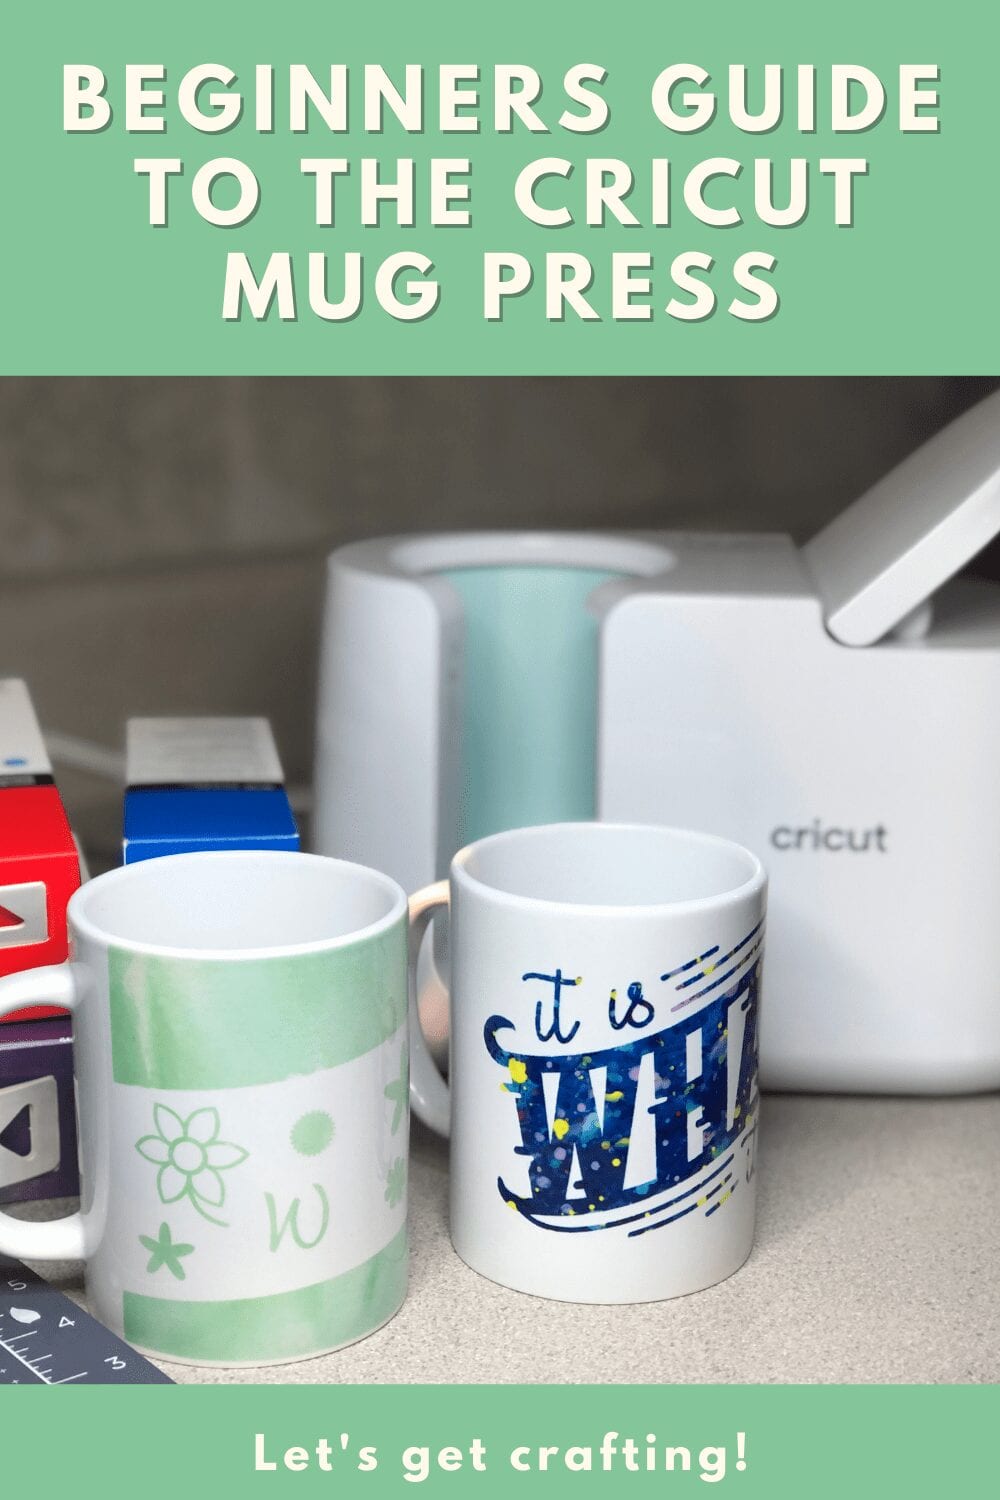 Cricut Mug Press in Cricut 